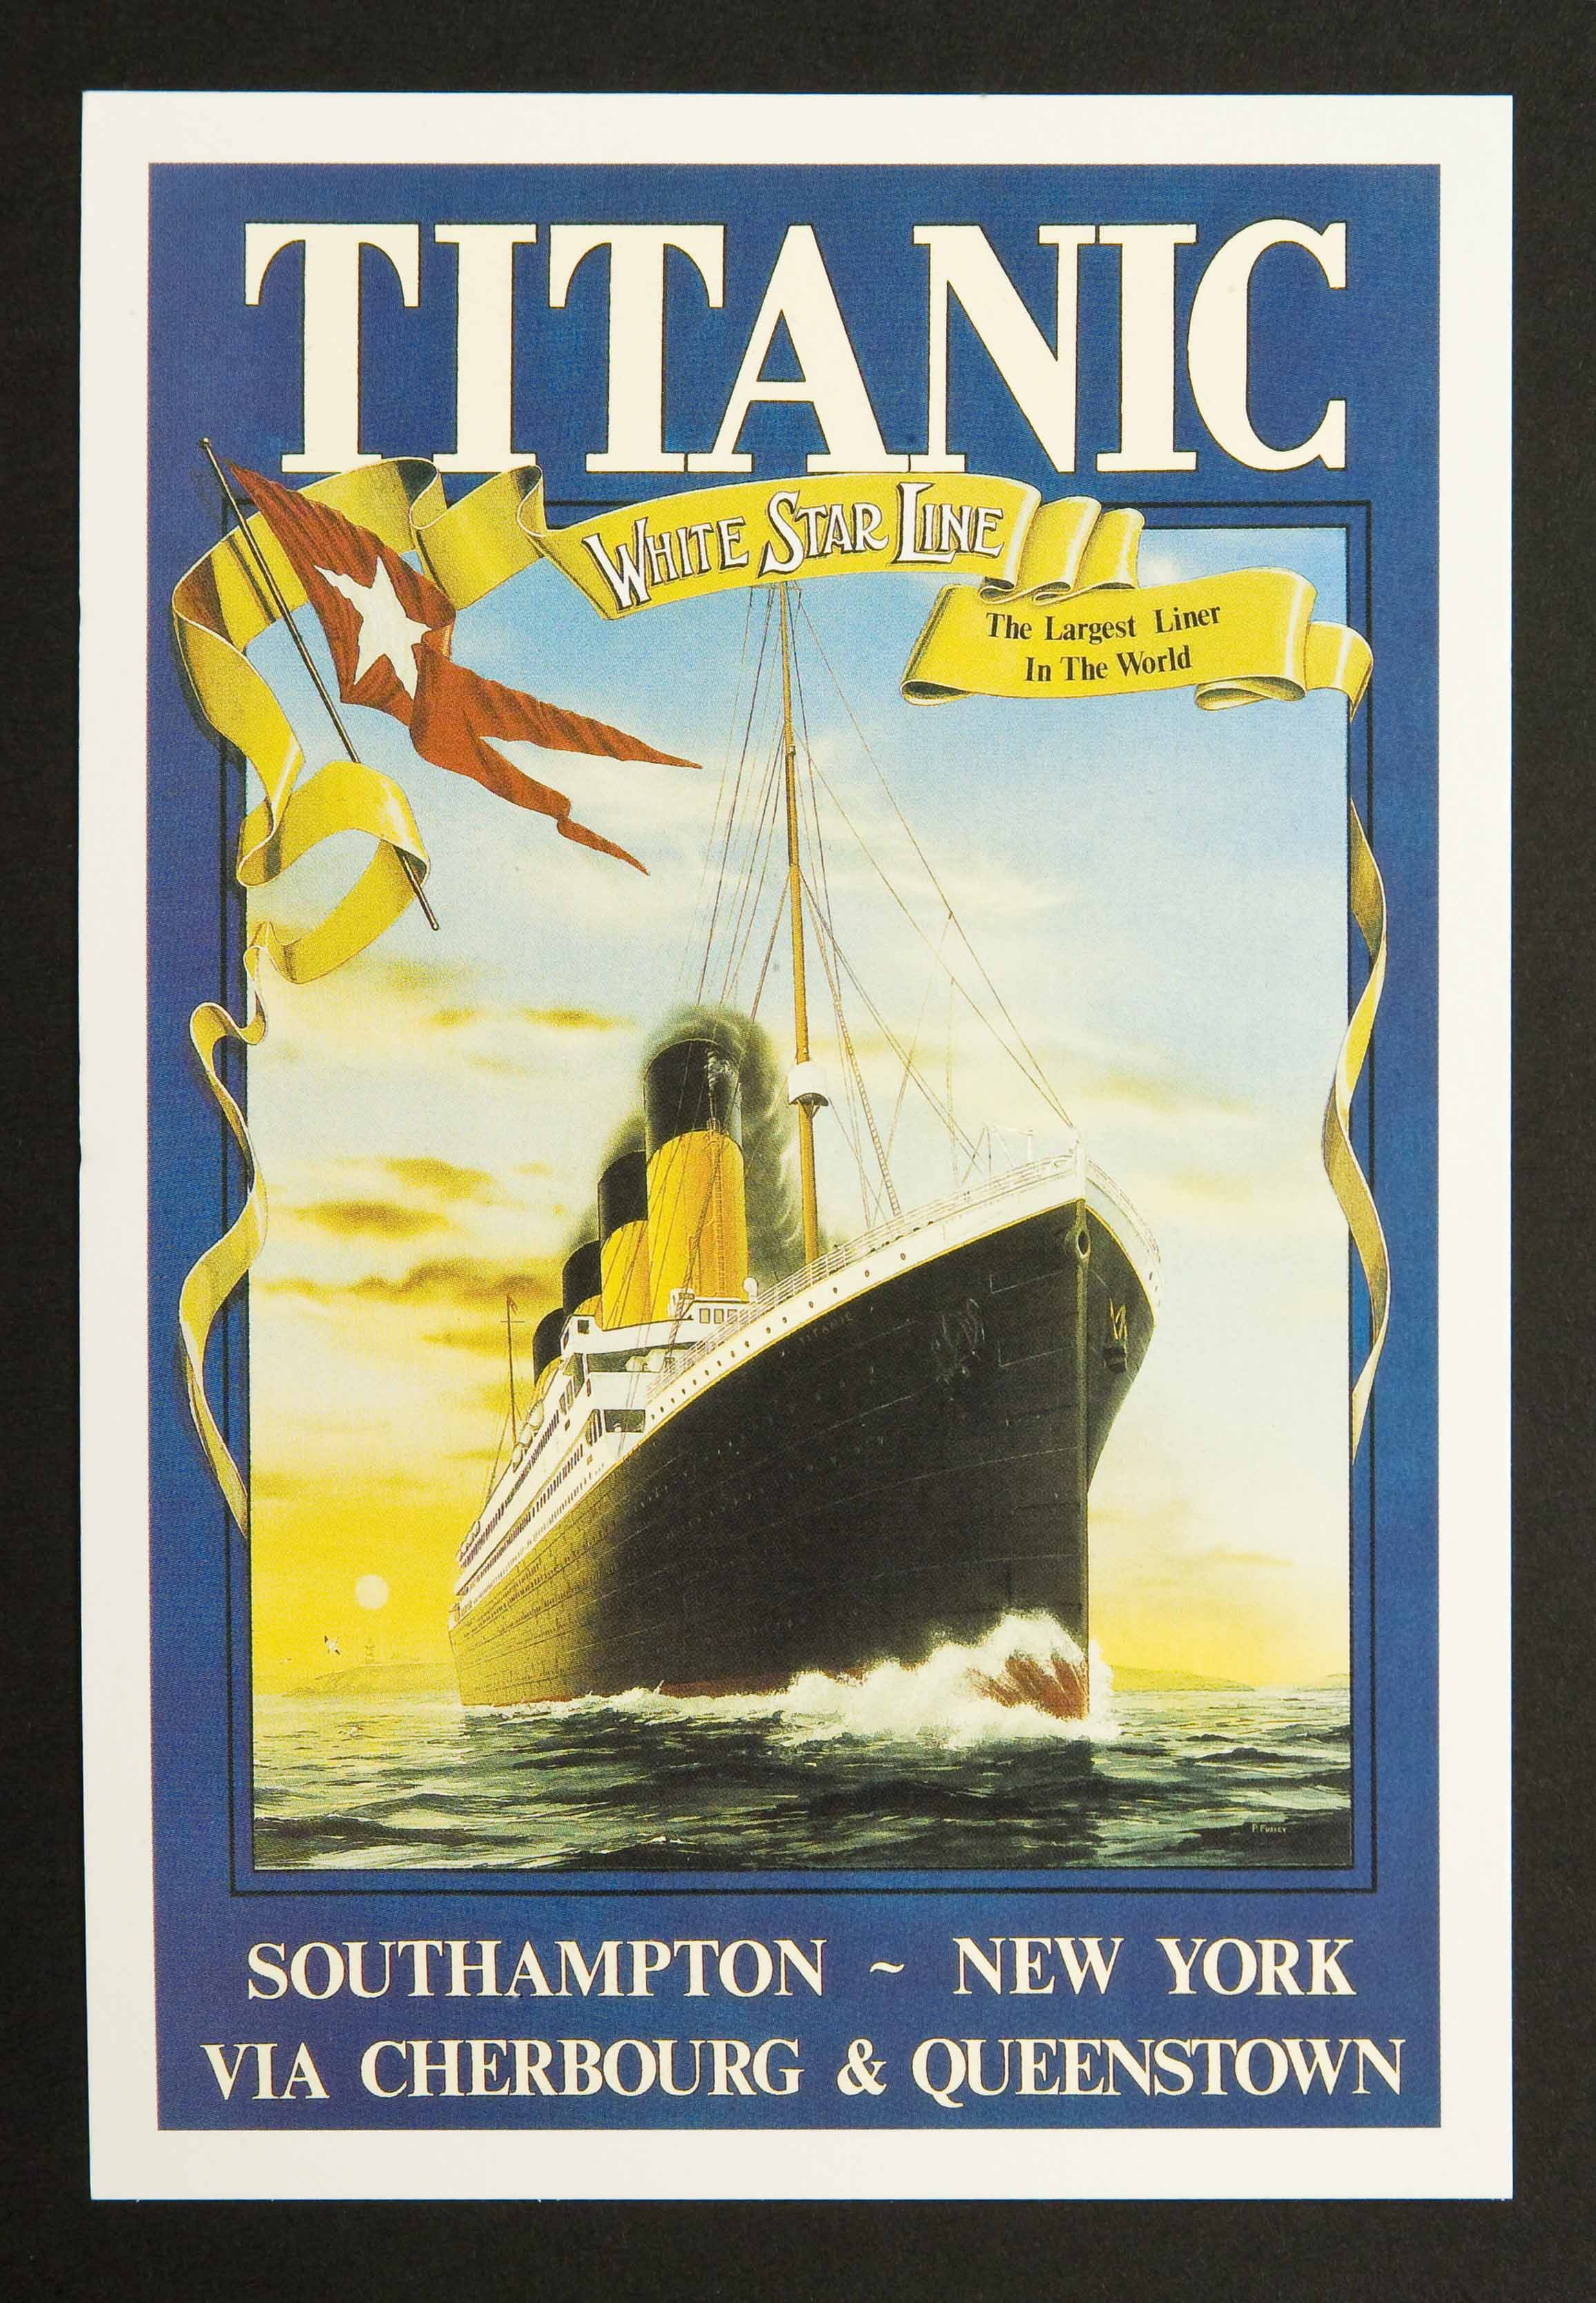 Titanic - White Star Line Sunrise A3 Poster